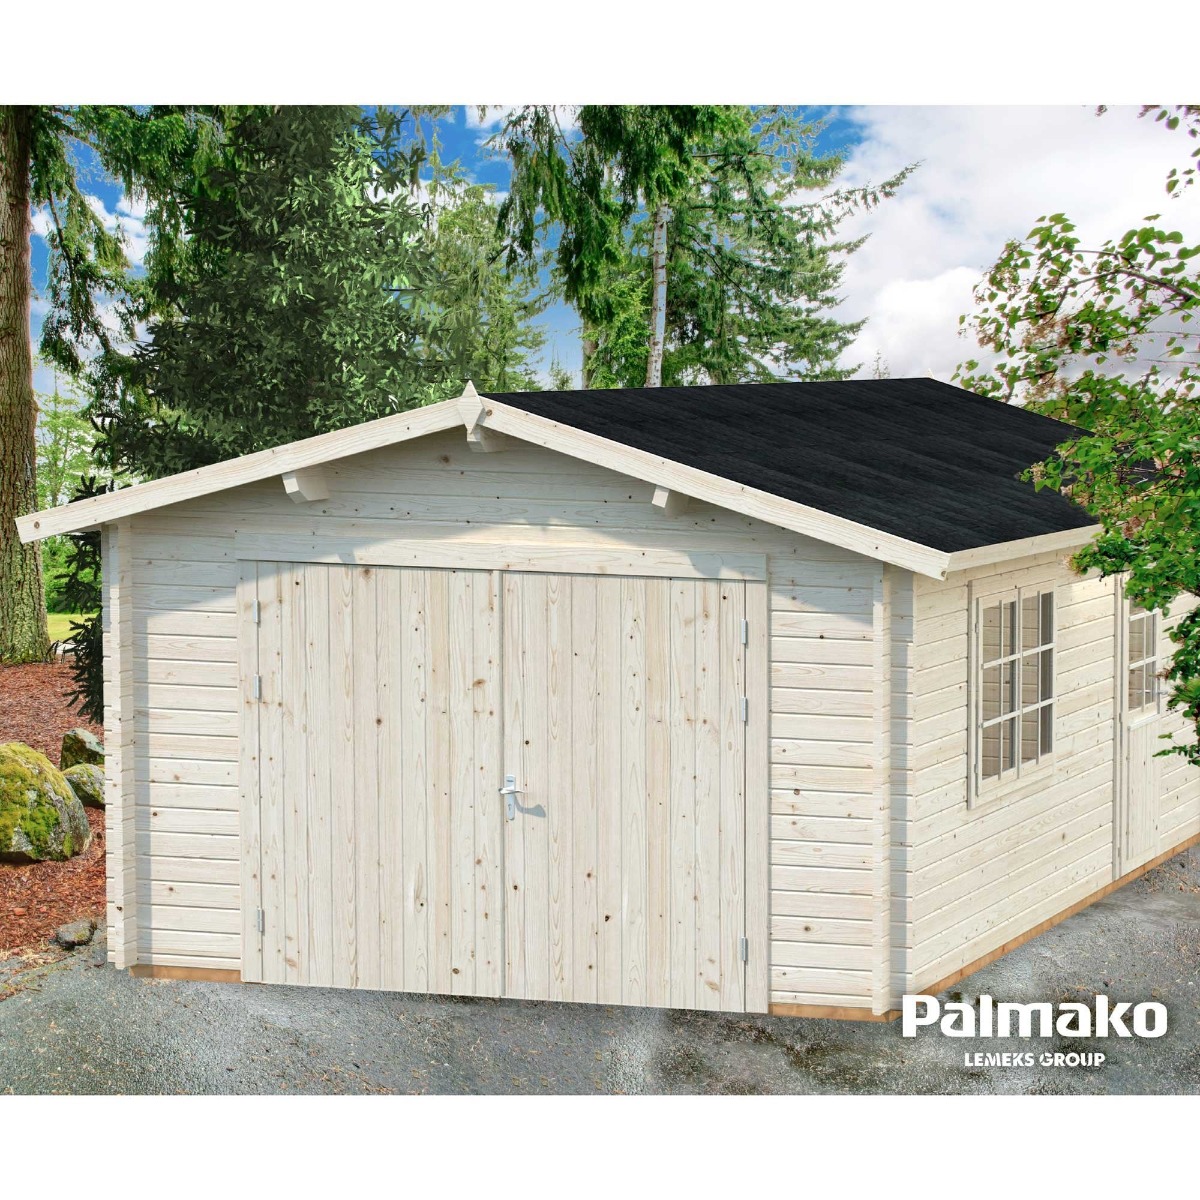 Palmako Roger 19.0m² Garage | Simply Log Cabins